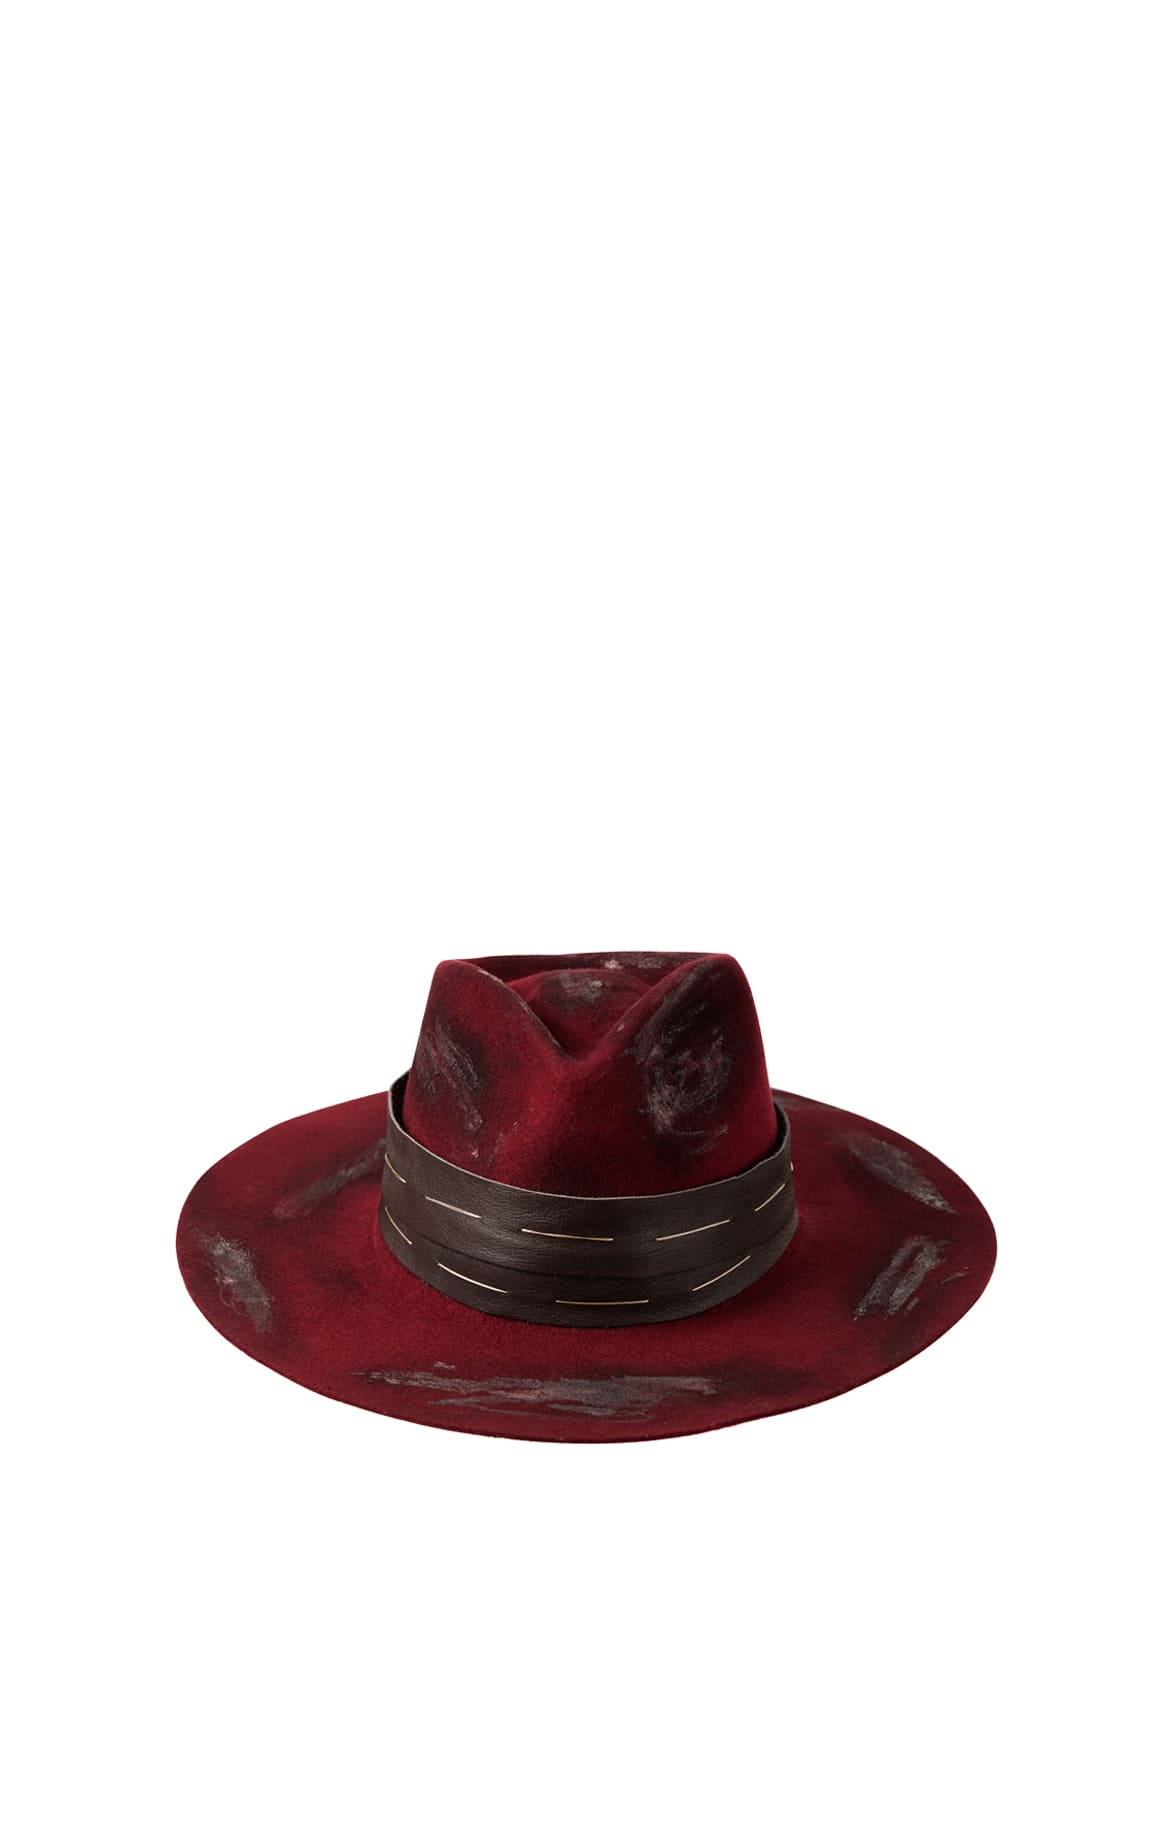 Rustic Red Fedora Hat